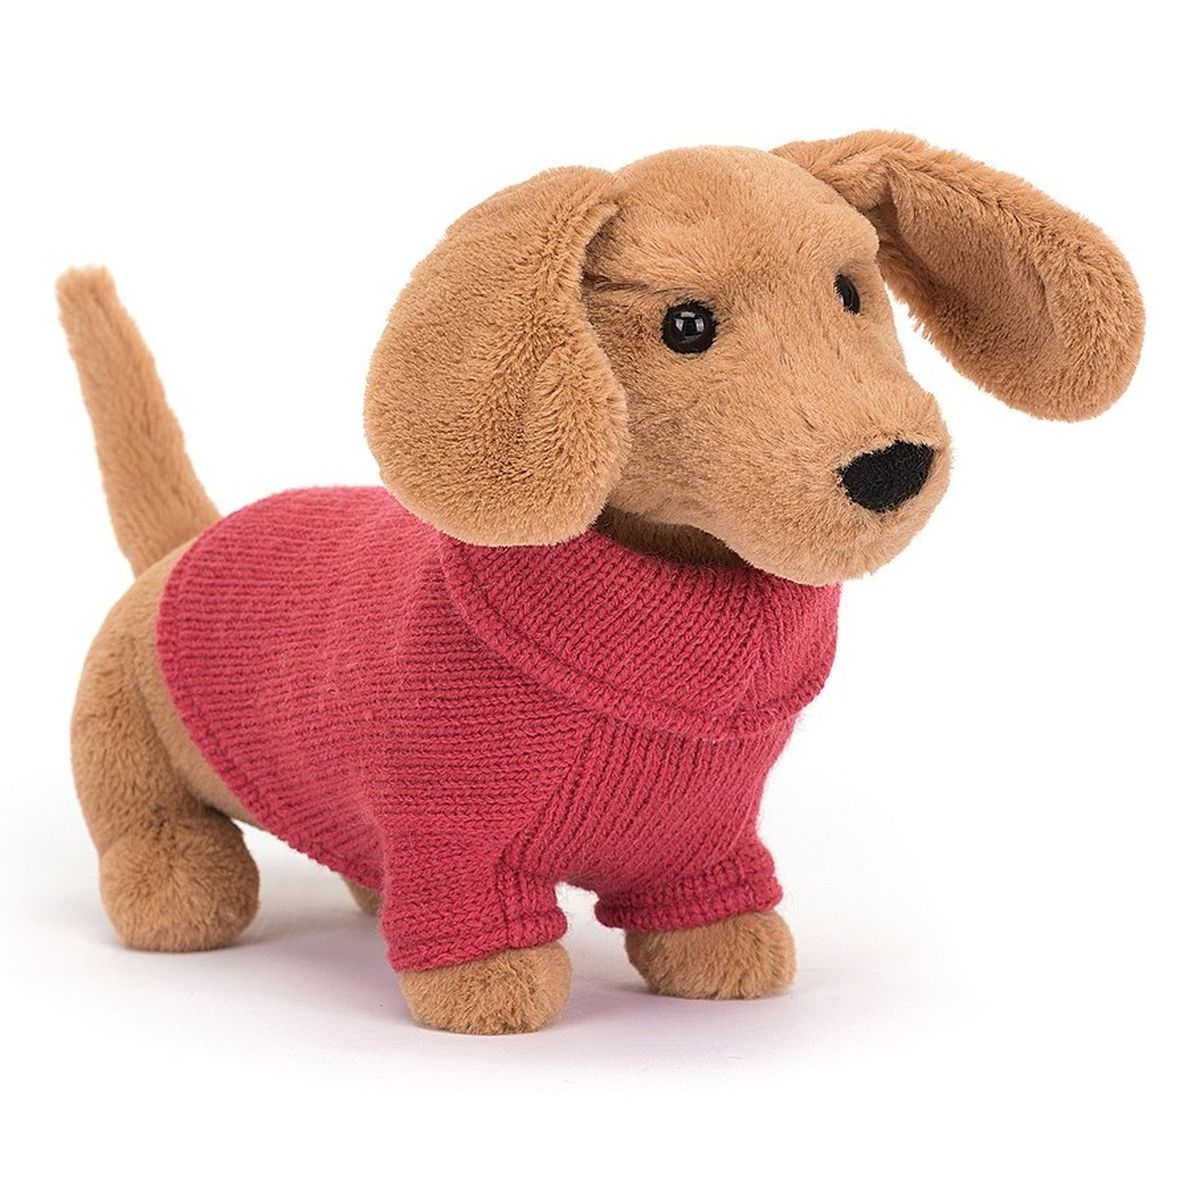 https://www.littleroomers.de/images/JC/jellycat-kuscheltier-hund-dackel-sweater-sausage-dog-pink_1200.jpg